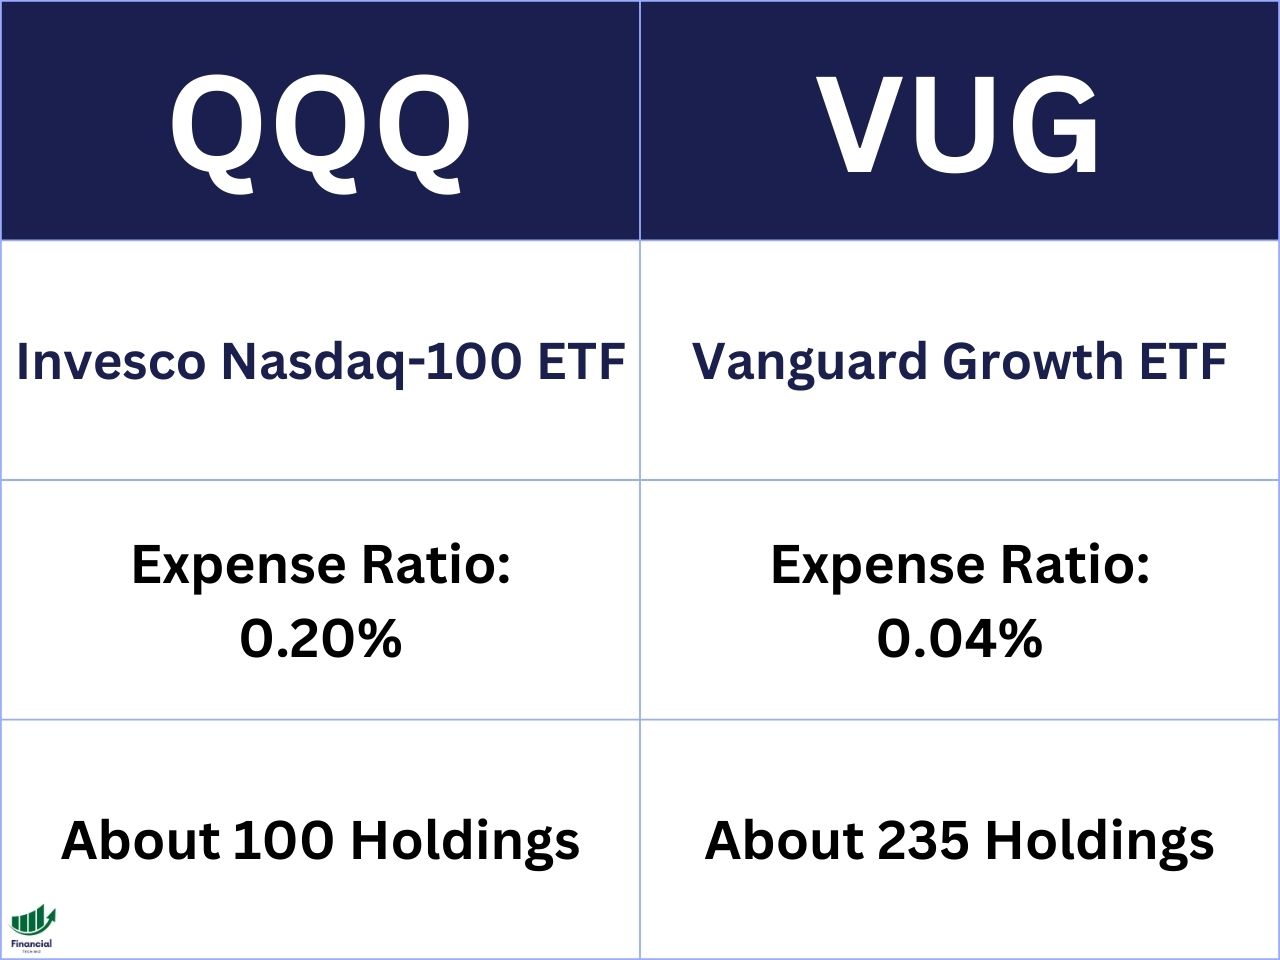 VUG vs. QQQ - Comparing Growth ETFs